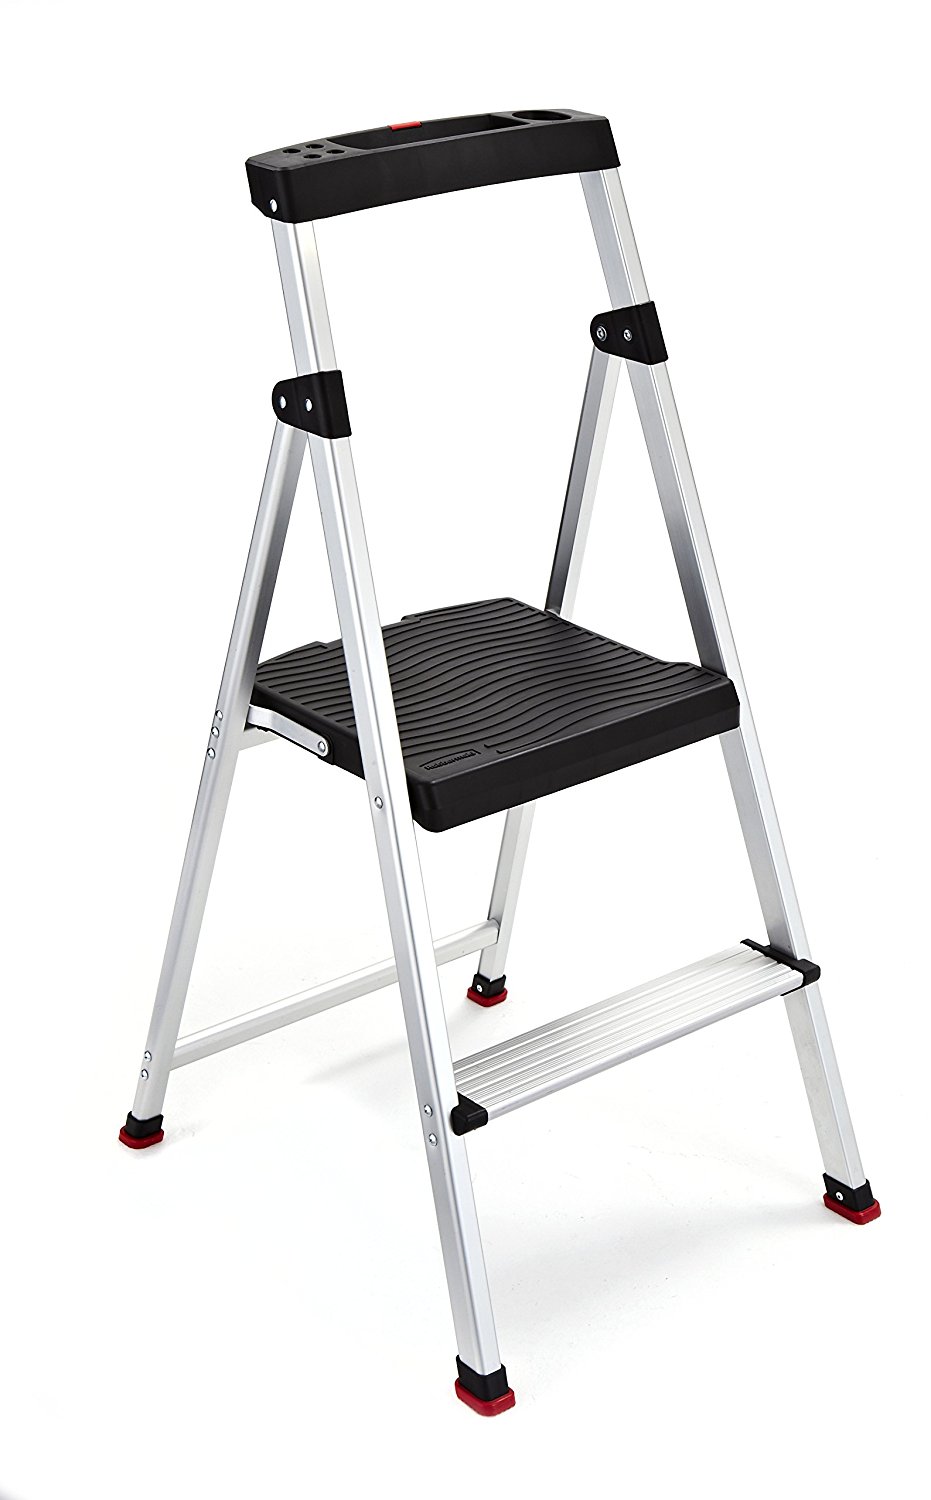 Rubbermaid 2-step lightweight aluminum step stool for $19